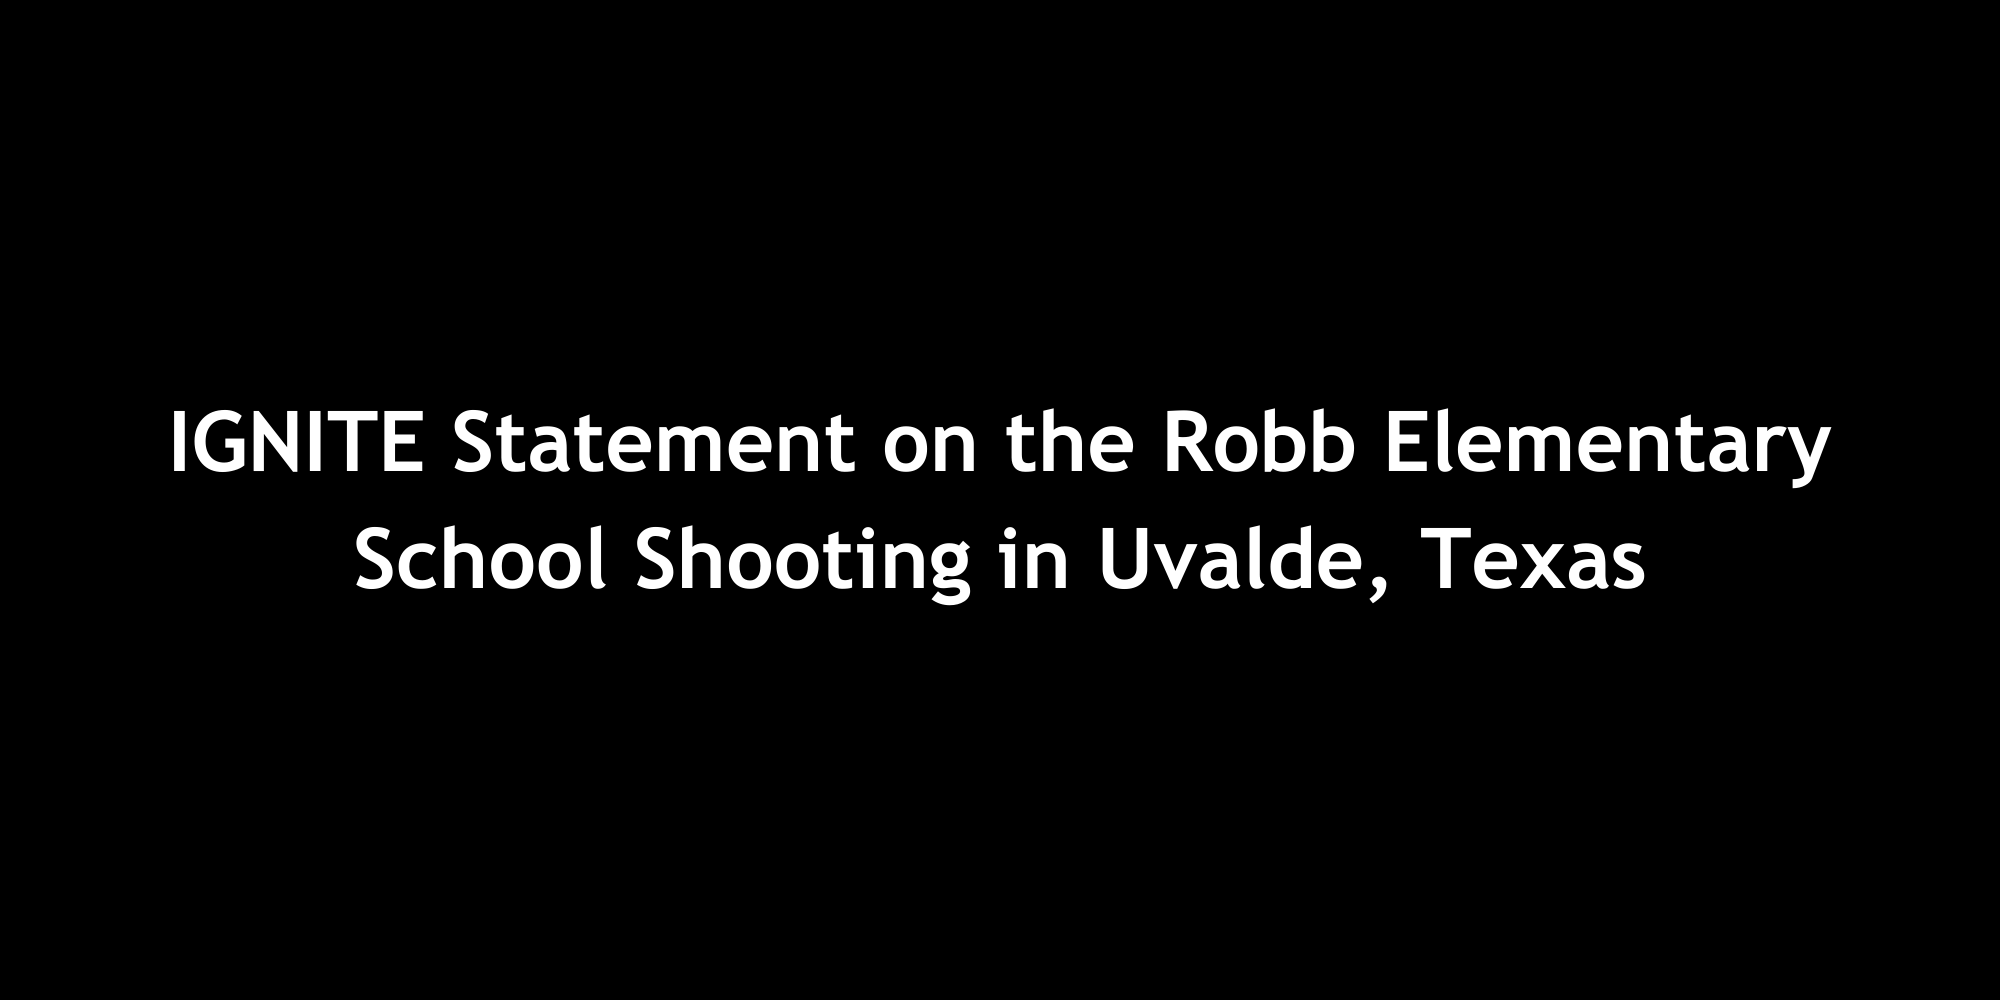 IGNITE Statement on the Robb Elementary School Shooting in Uvalde, Texas